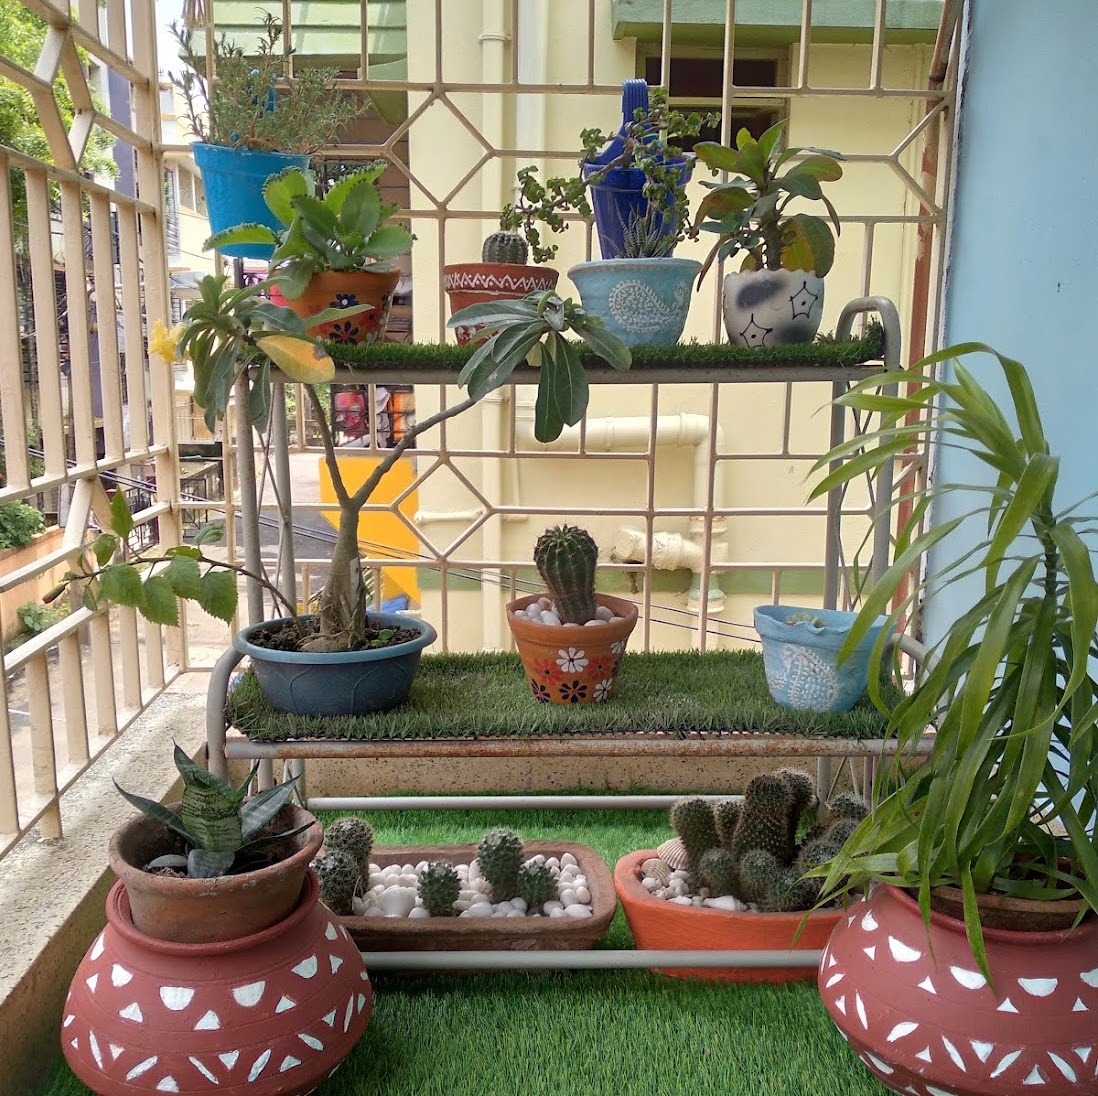 Images of plants in Kolkata, India